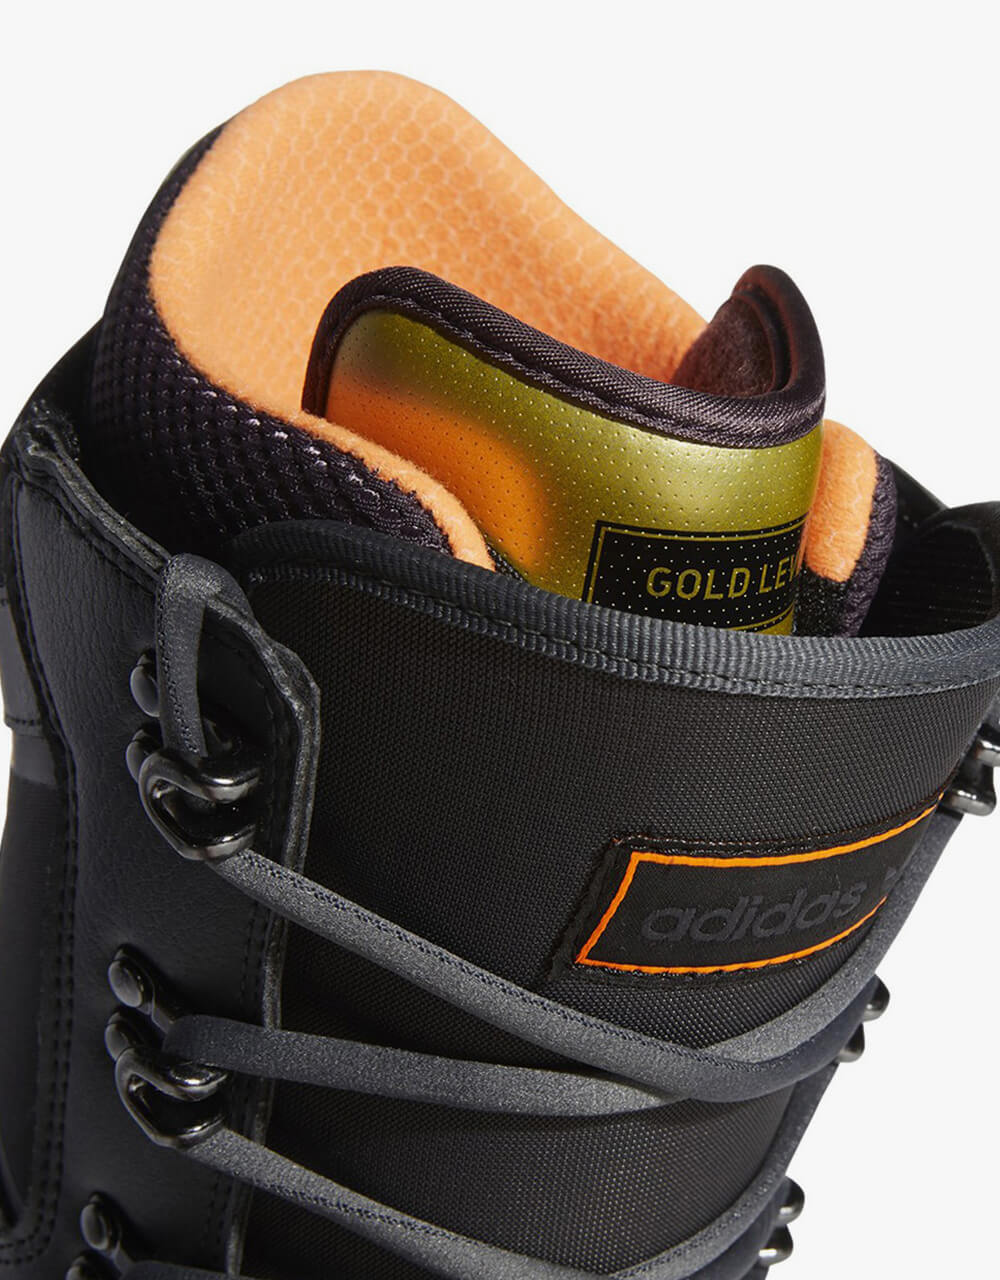 adidas Tactical Lexicon ADV 2021 Snowboard Boots - Grey/Core Black/Signal Orange